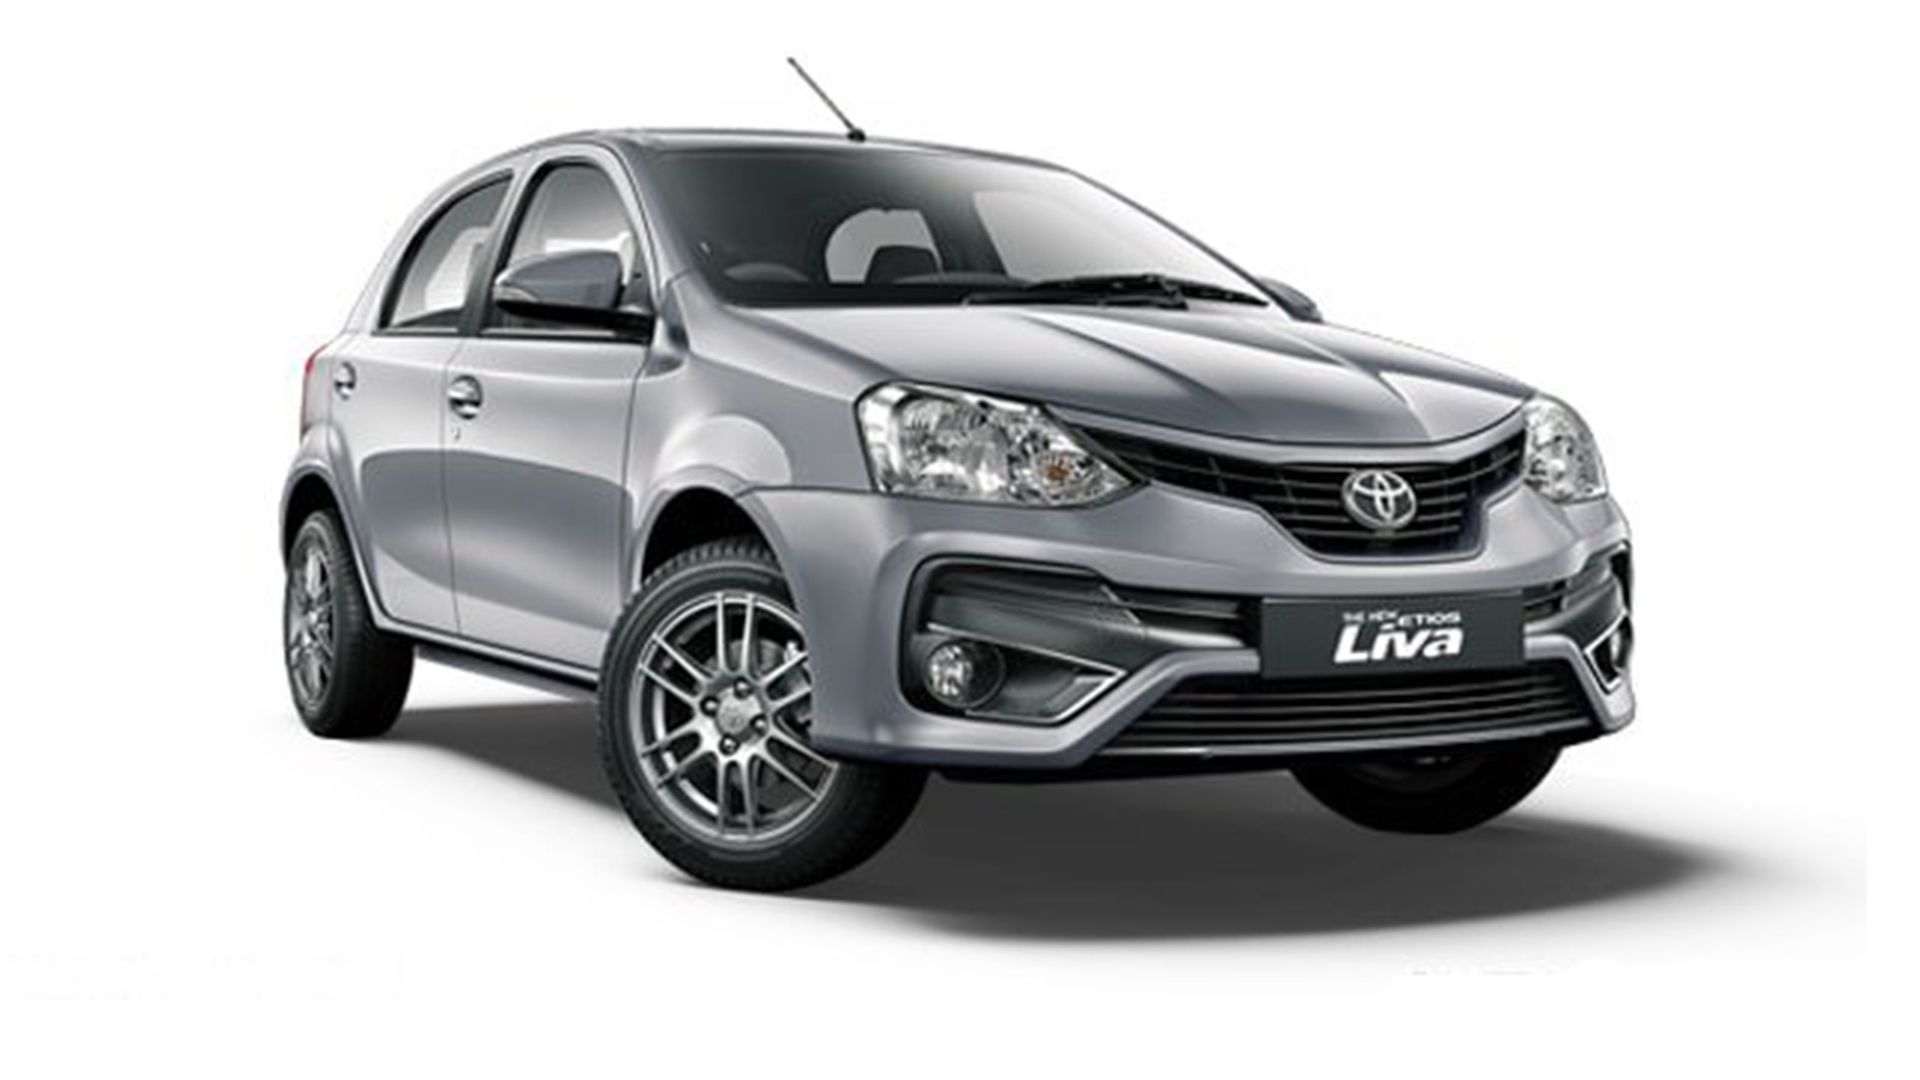 Toyota Etios Liva Image & Exterior Photo Gallery [Images]